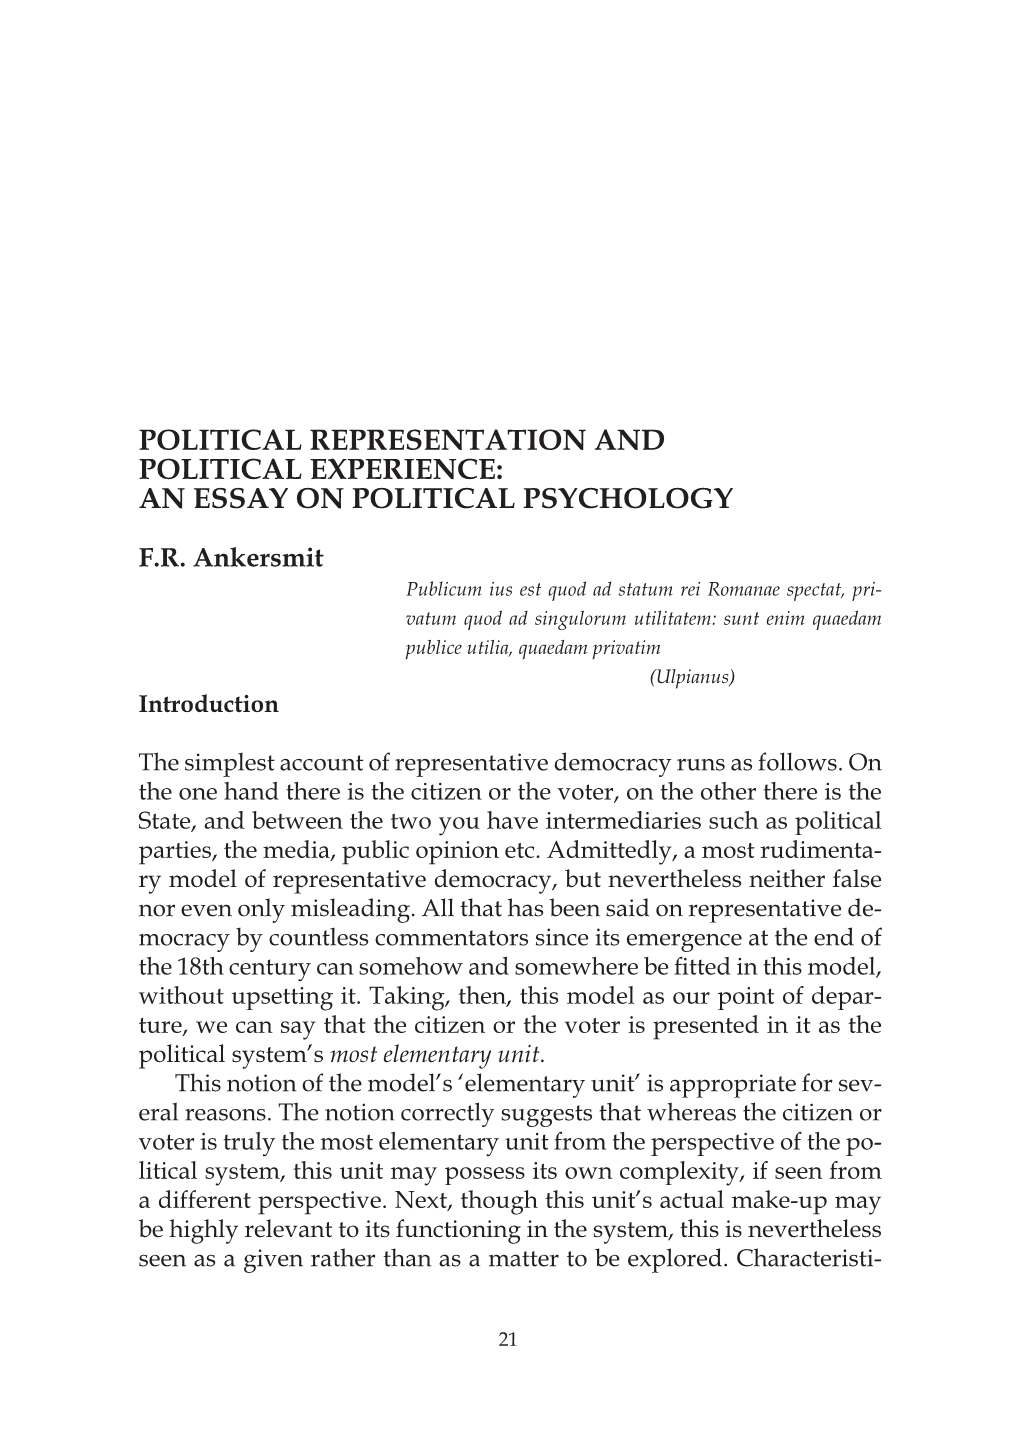 An Essay on Political Psychology